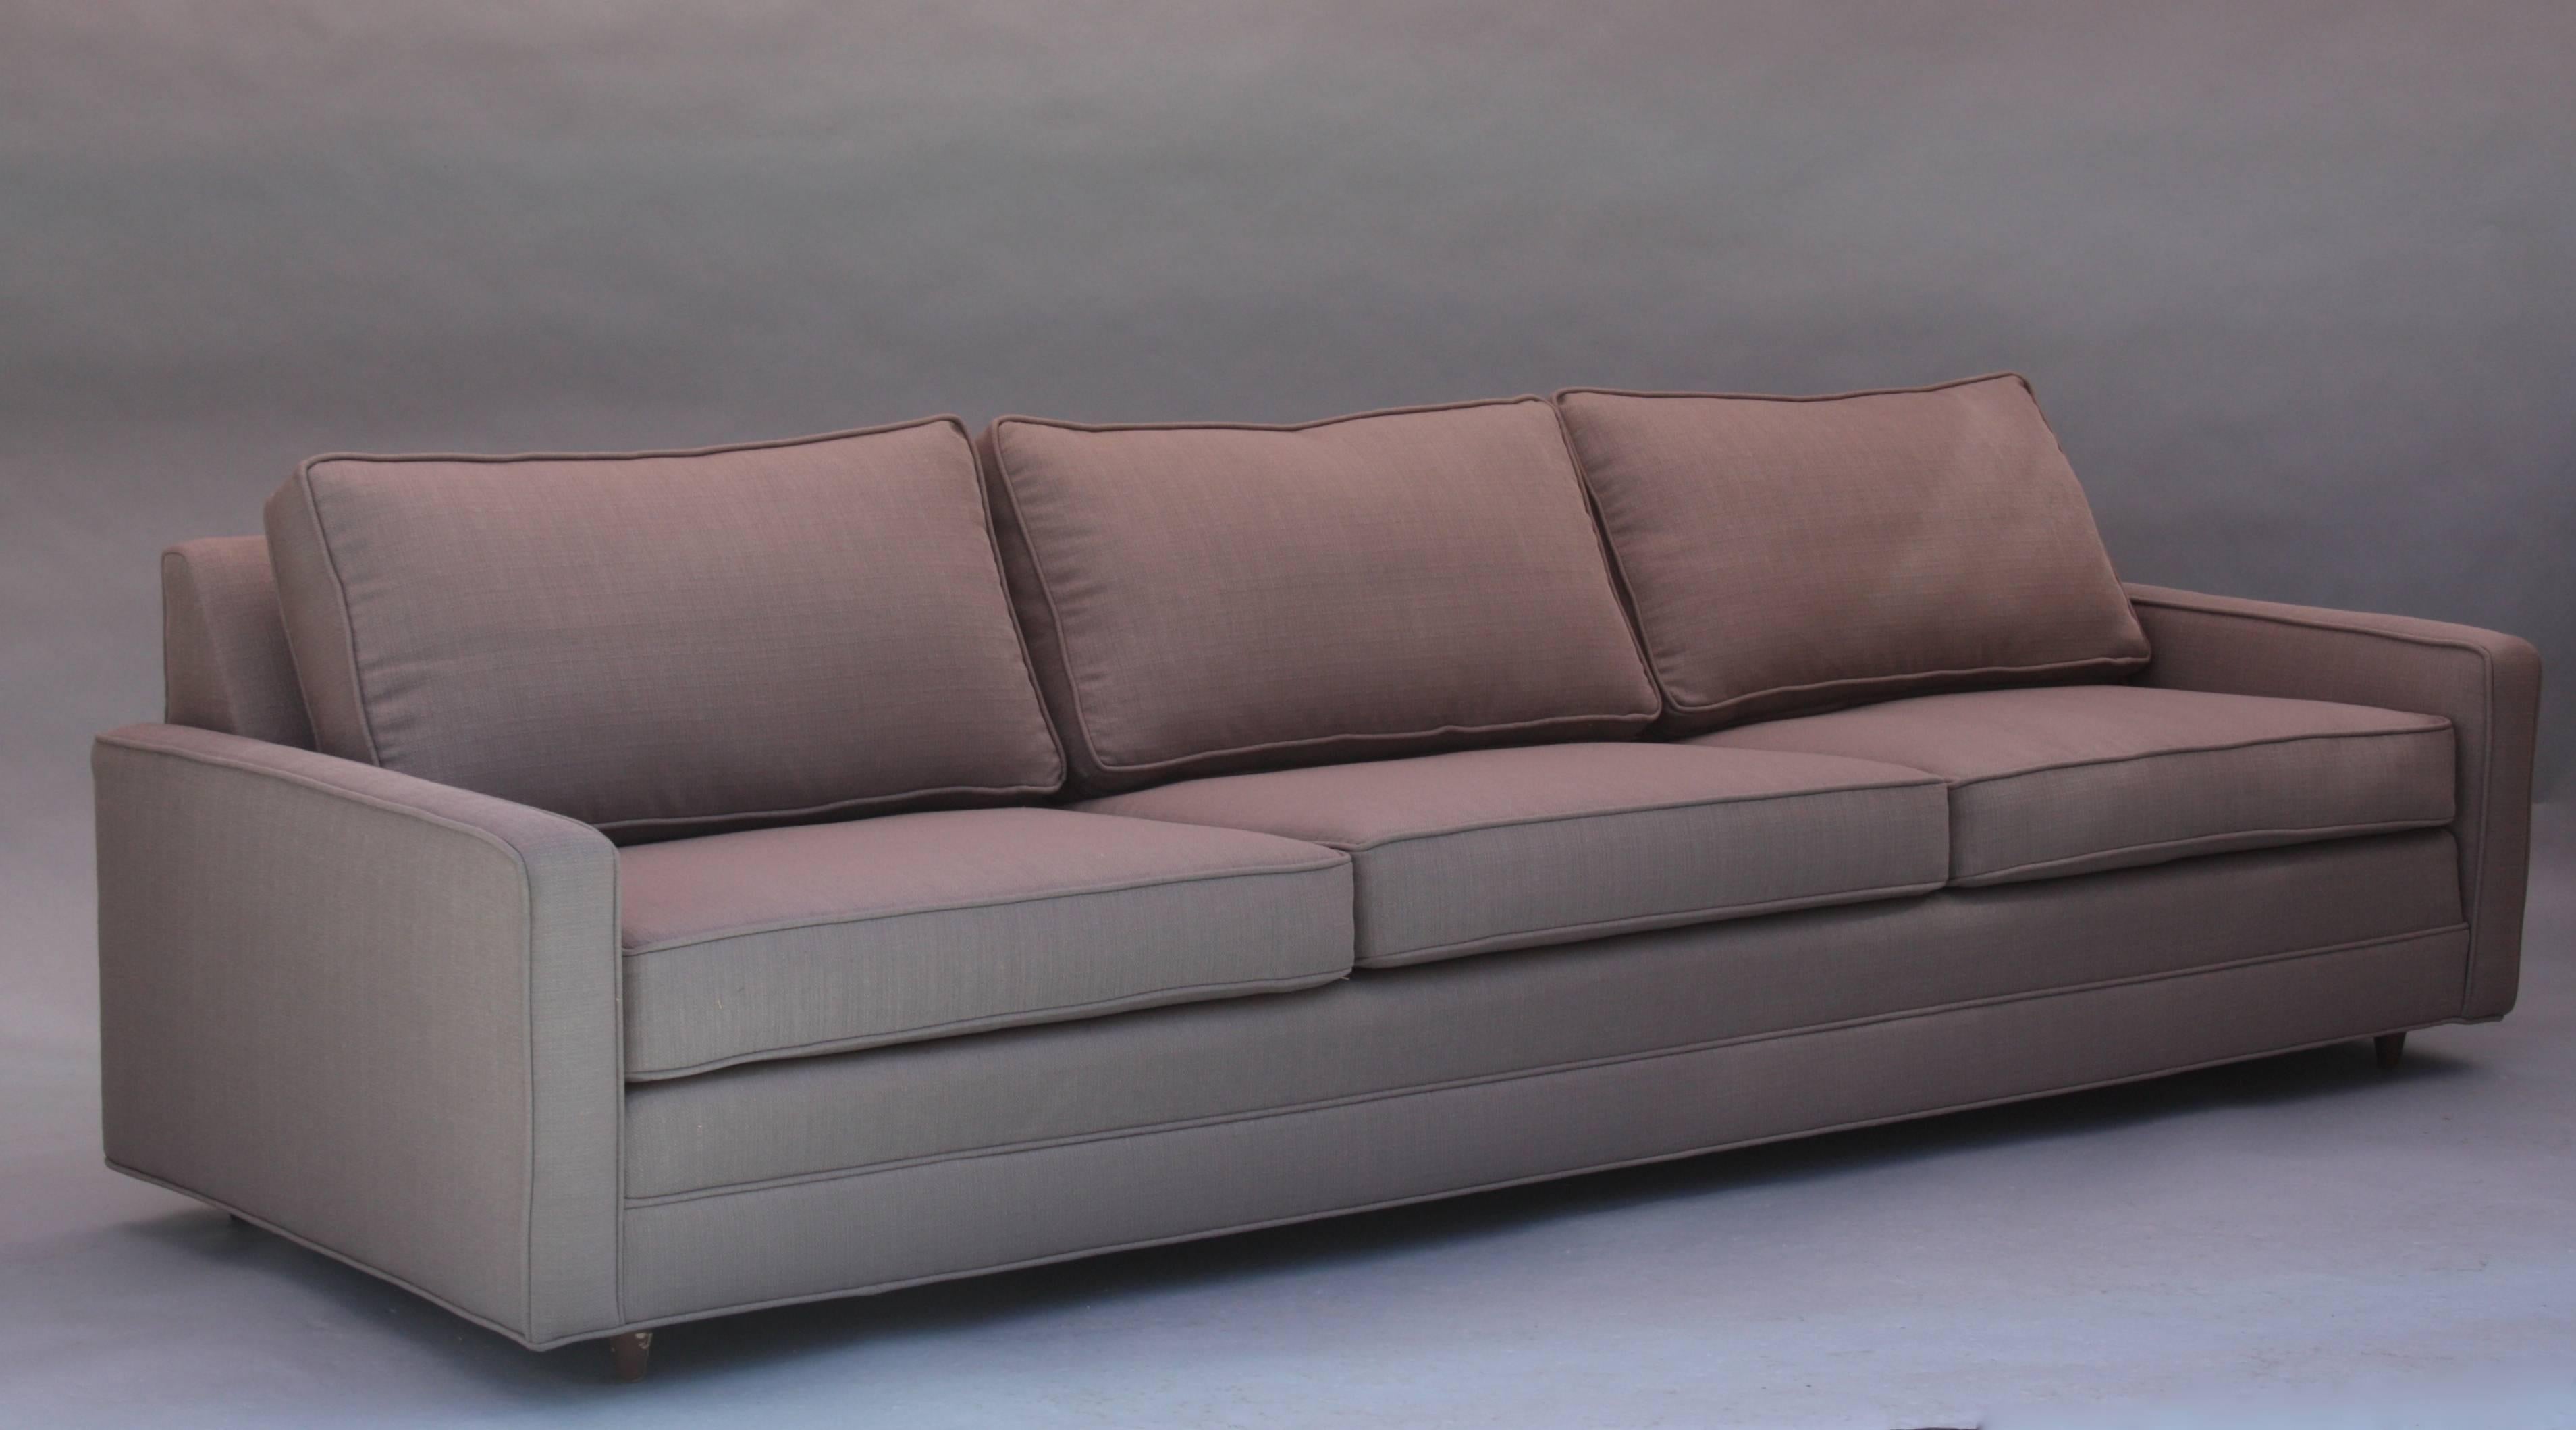 American Mid-Century Modern Sofa For Sale